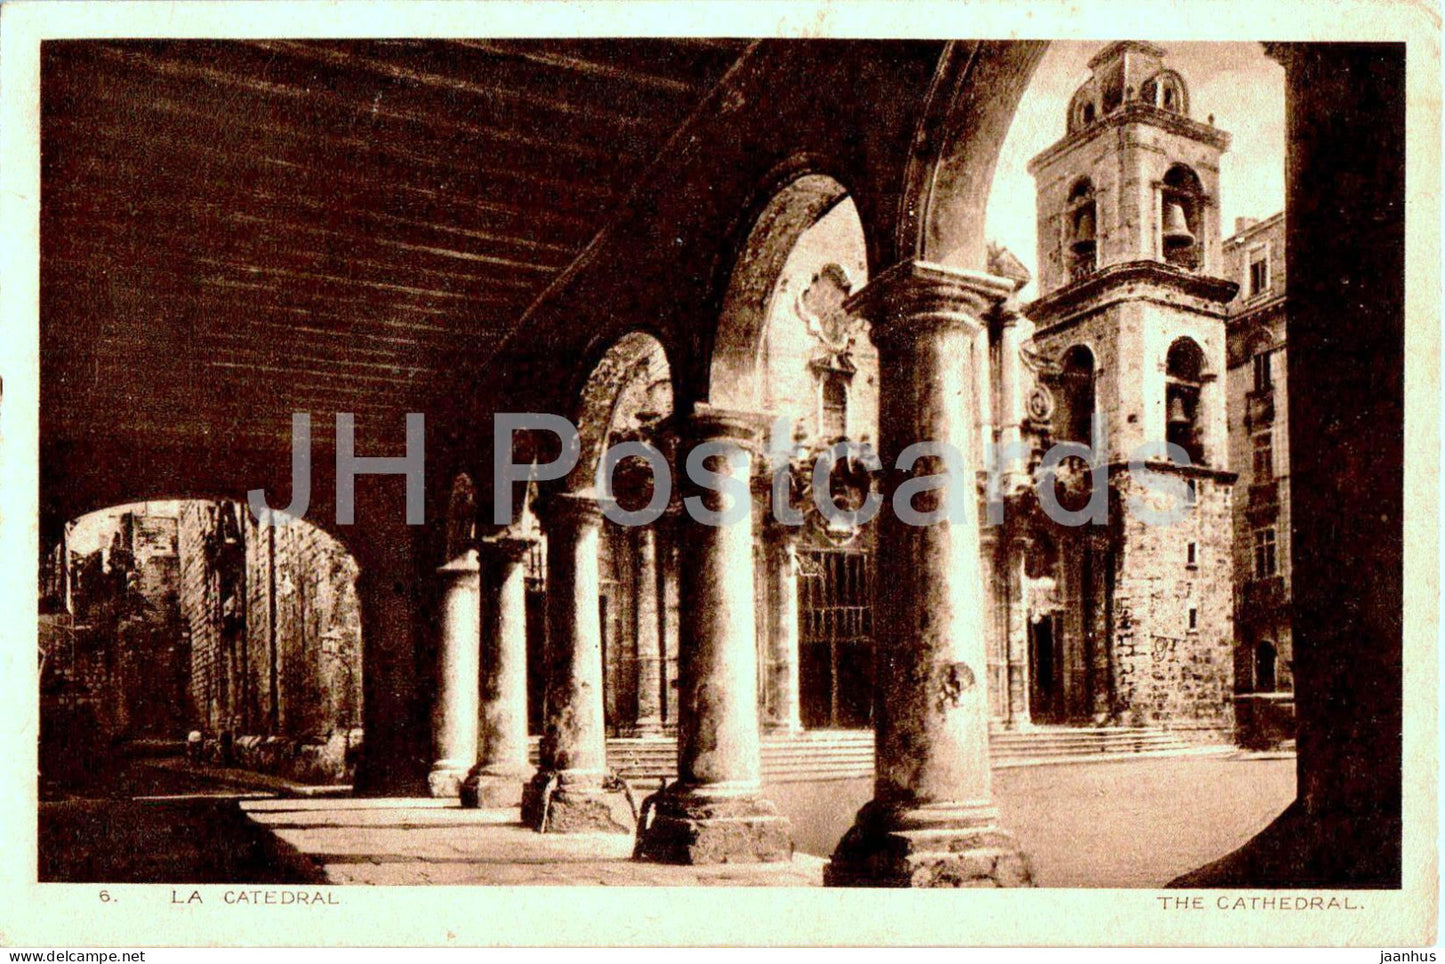 Havana - La Catedral - The Catedral - 6 - old postcard - 1933 - Cuba - used - JH Postcards